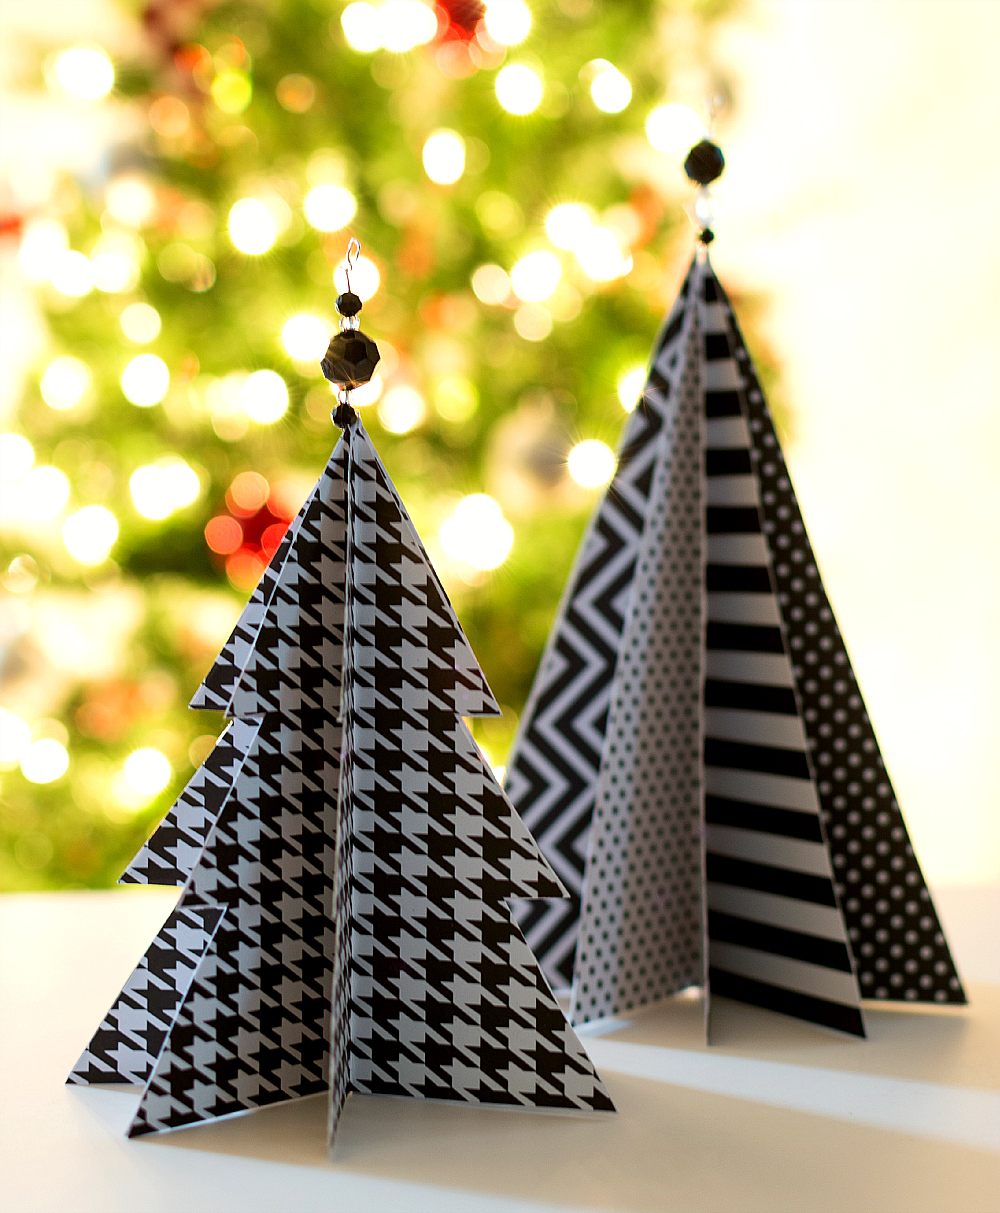 Full of Personali-tree: Mini DIY Christmas Trees